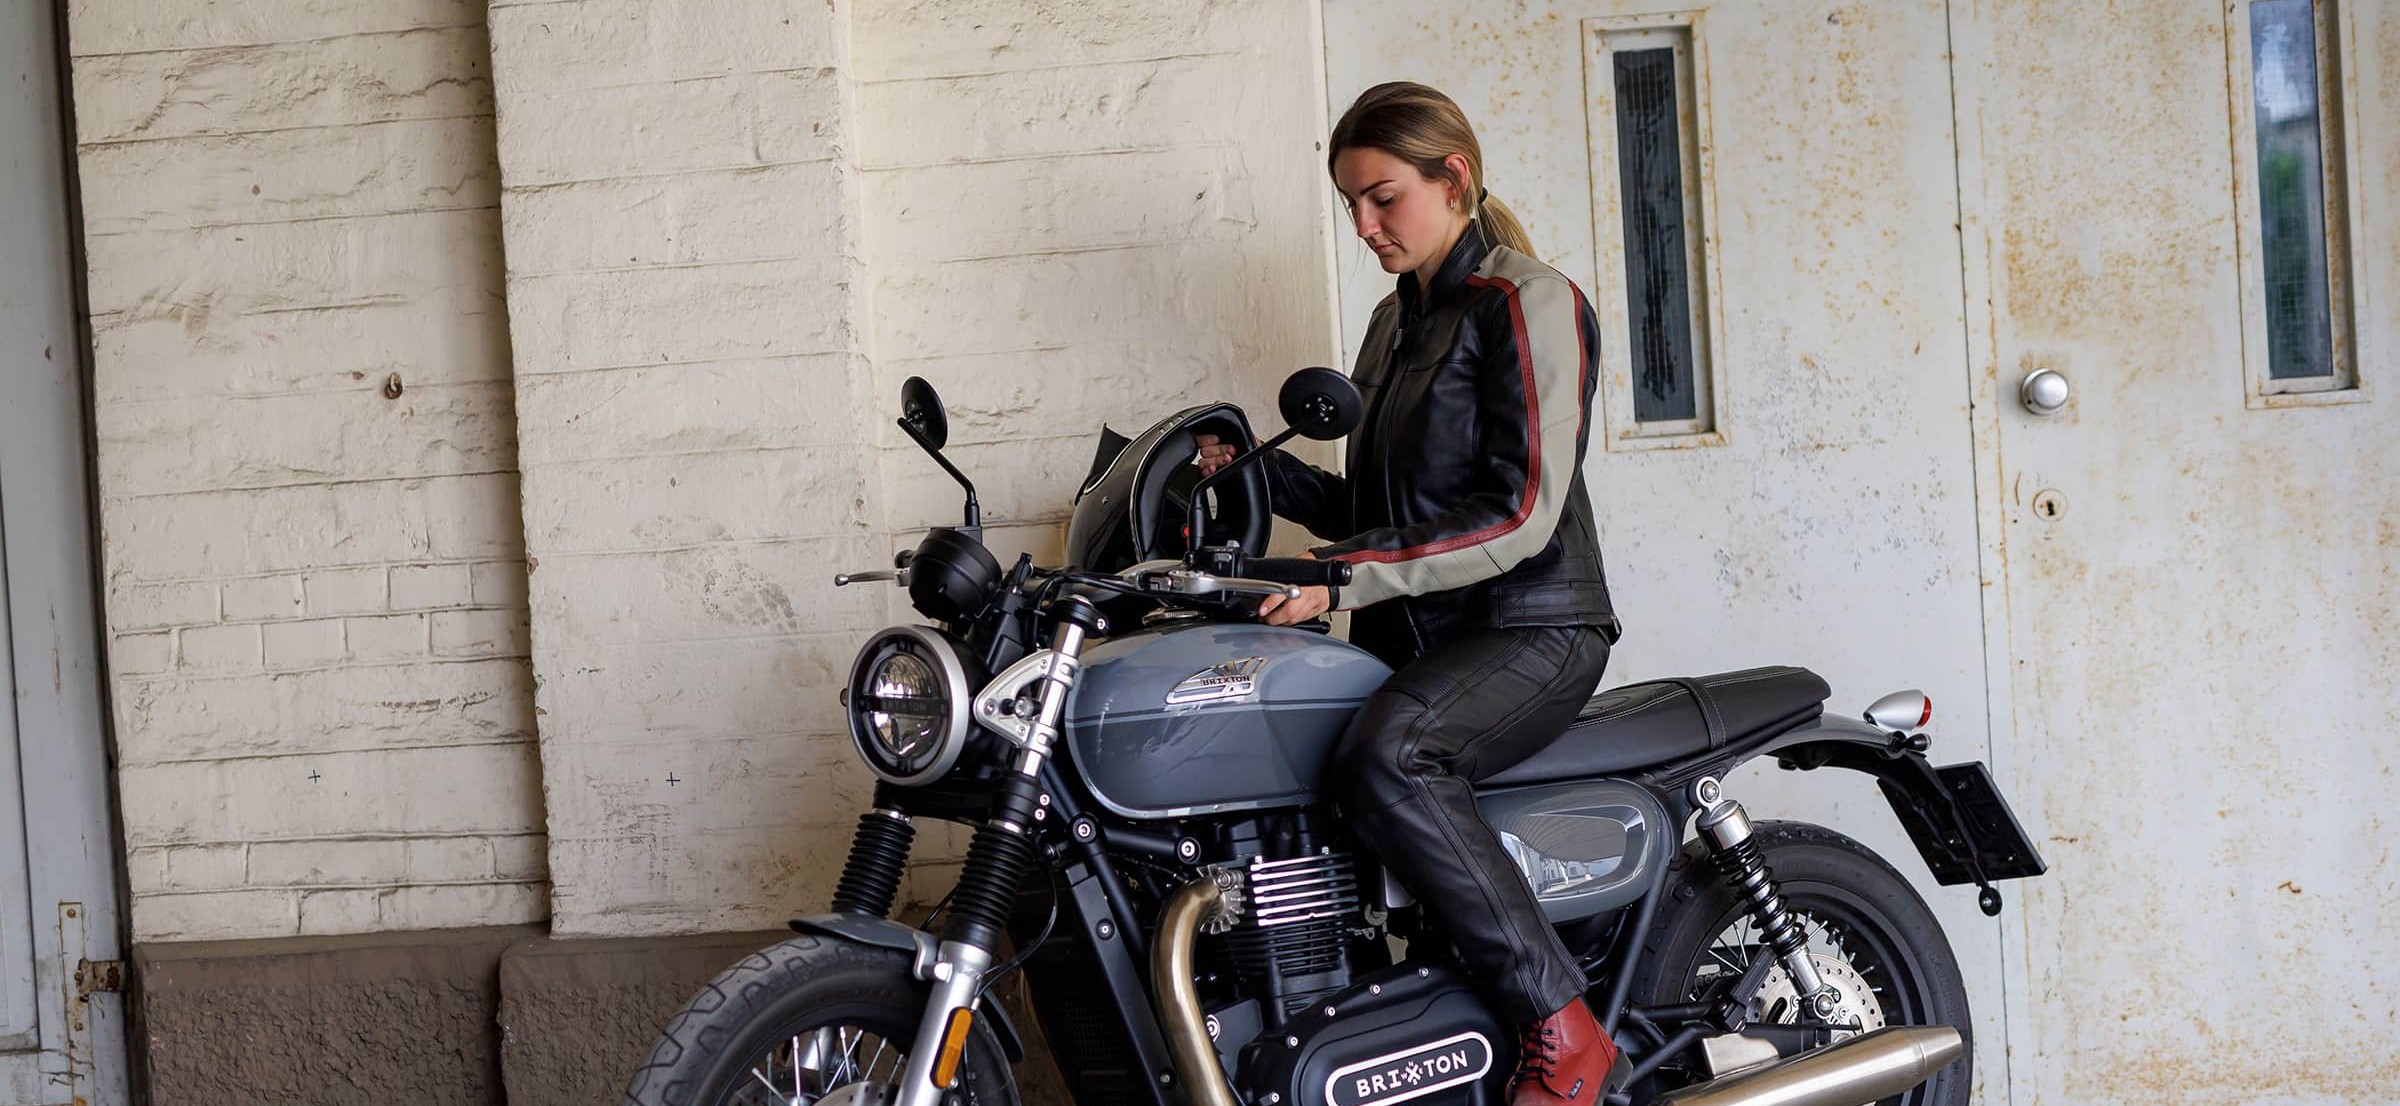 Veste de moto femme